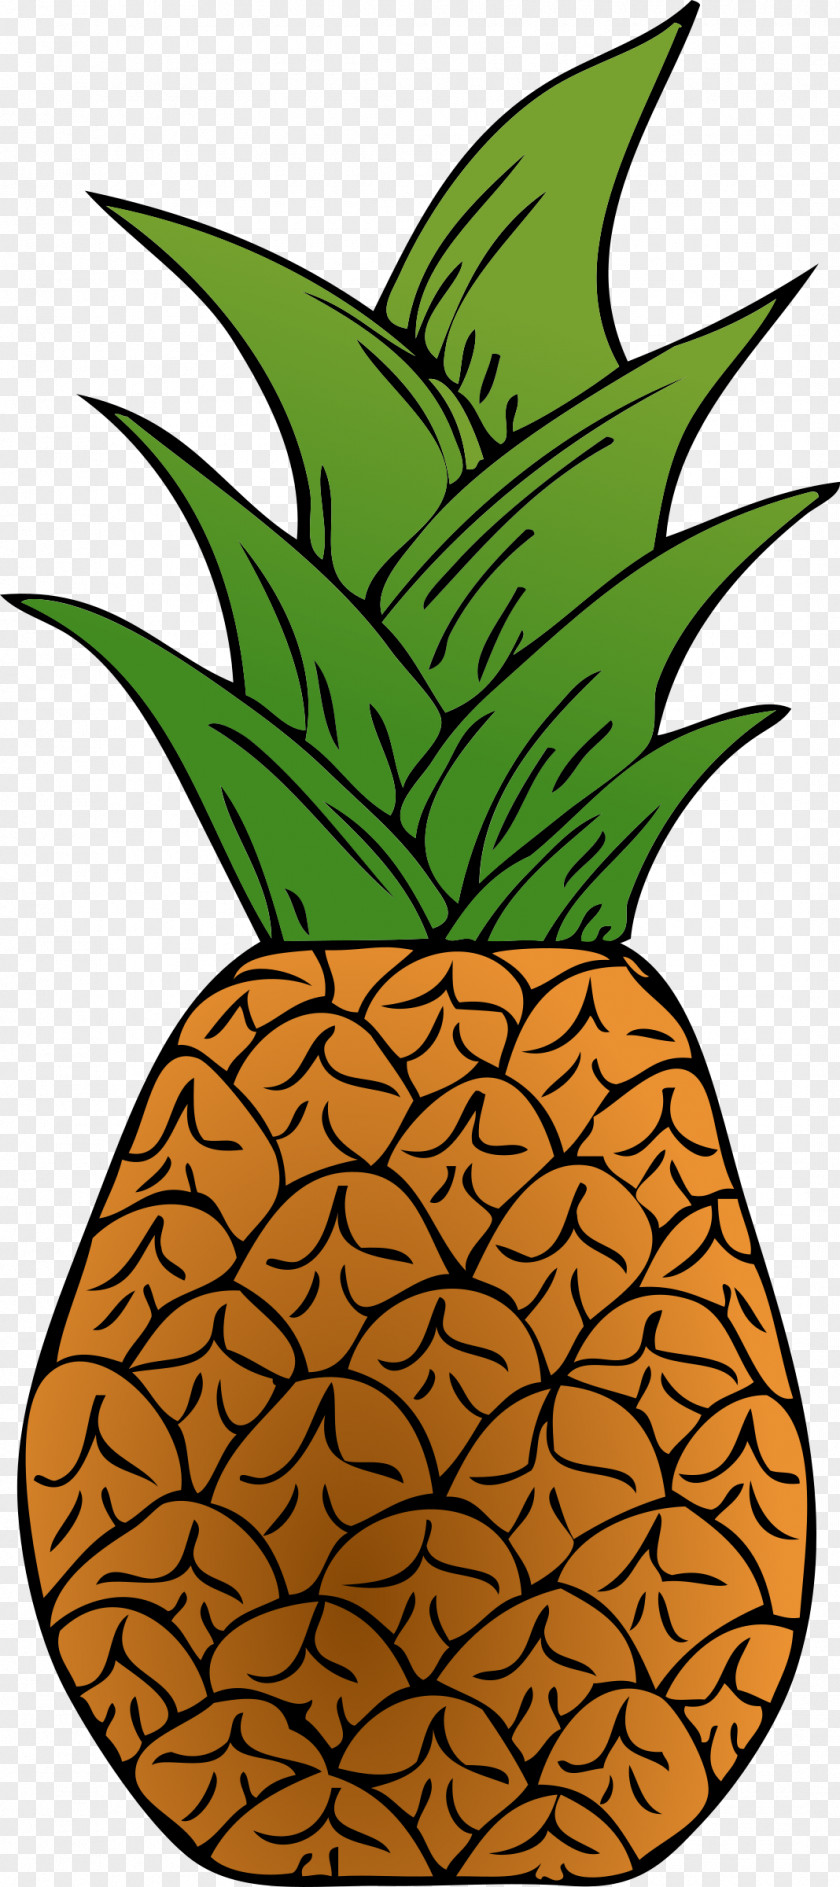 Pineapple Fruit Salad Clip Art PNG